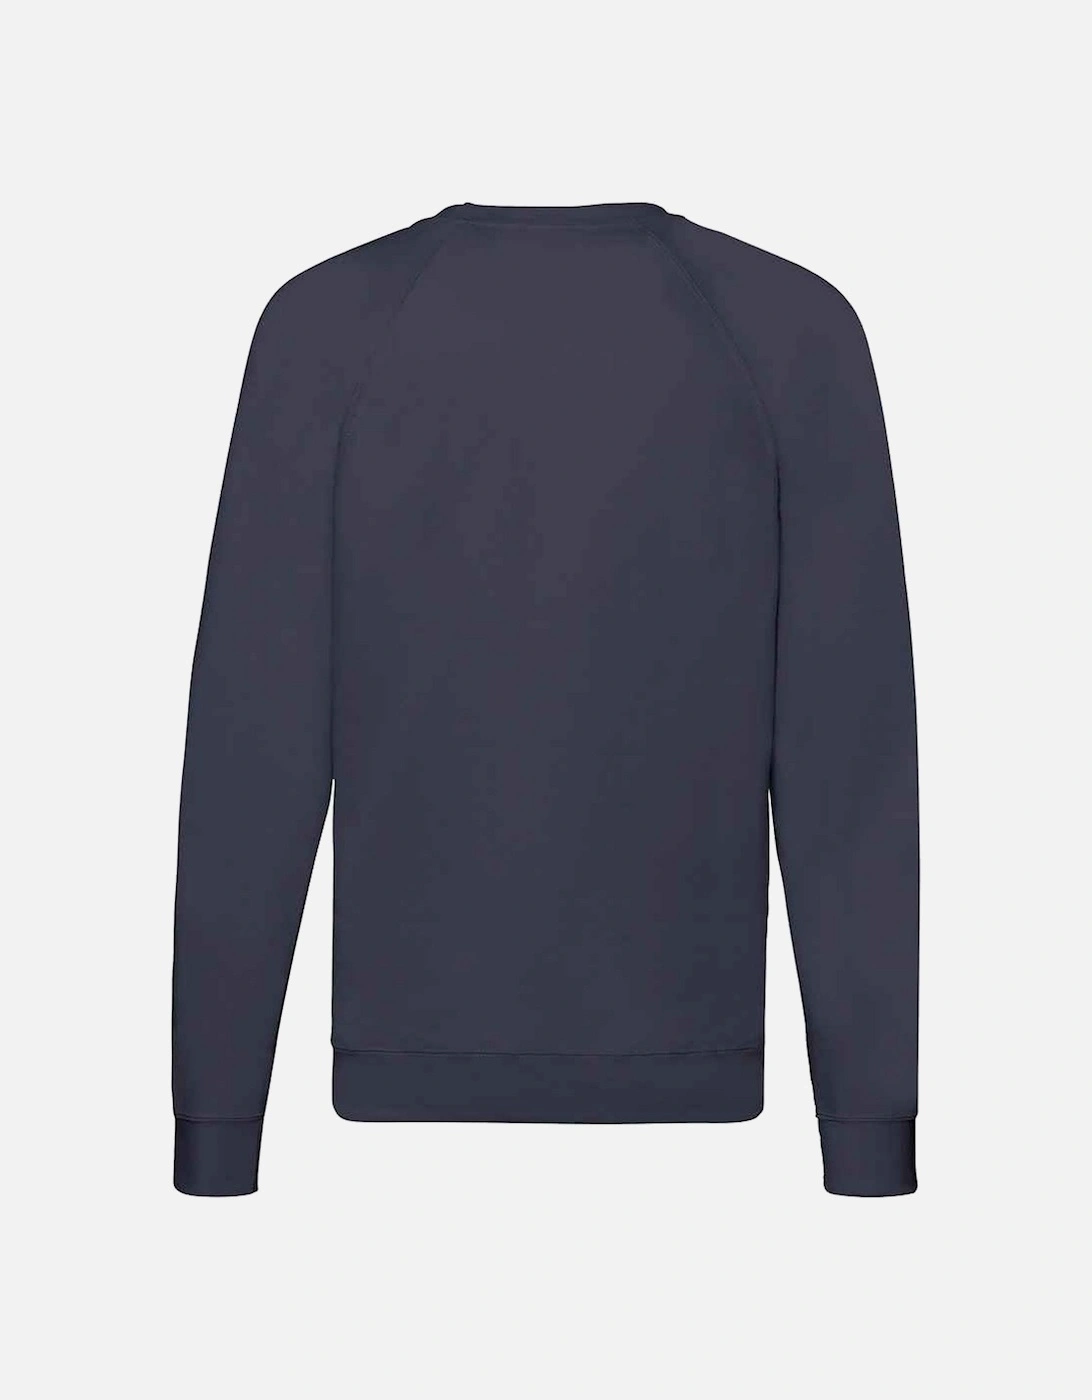 Unisex Adult Lightweight Raglan Sweatshirt